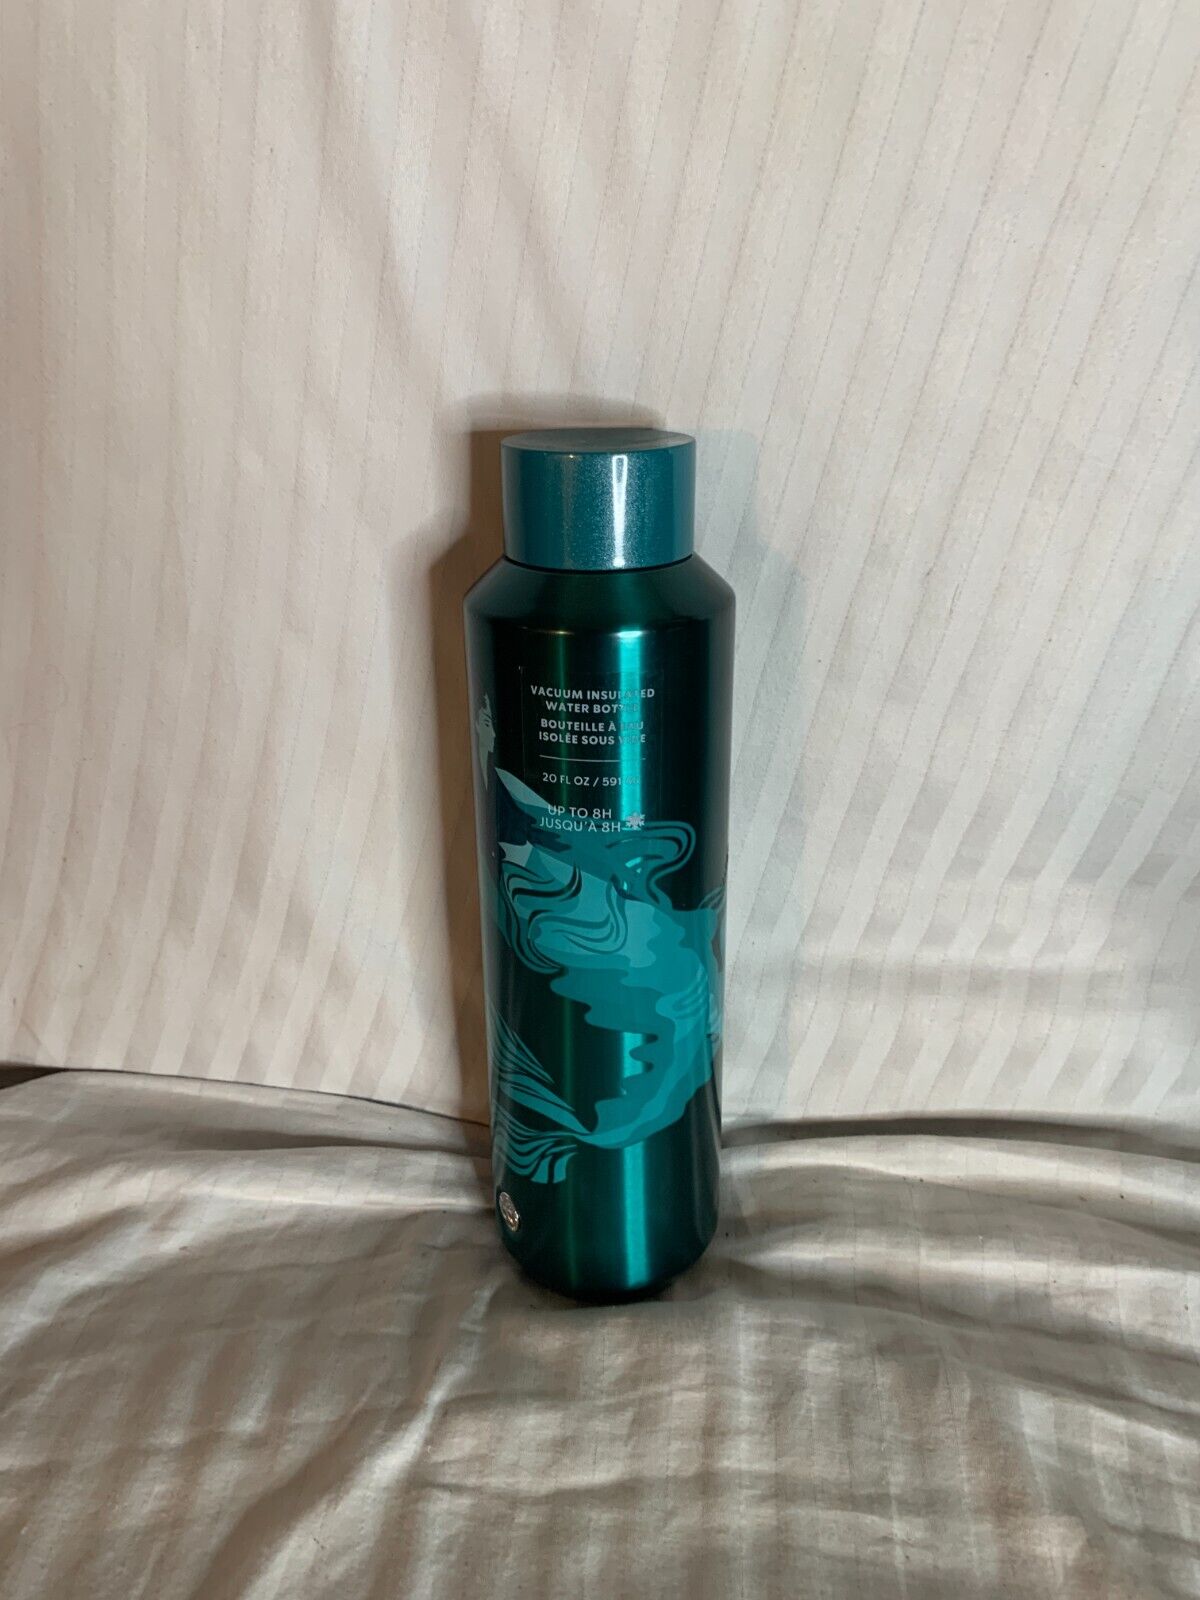 NEW Starbucks Vacuum Insulated Water Bottle 20 Oz Metal Green Teal